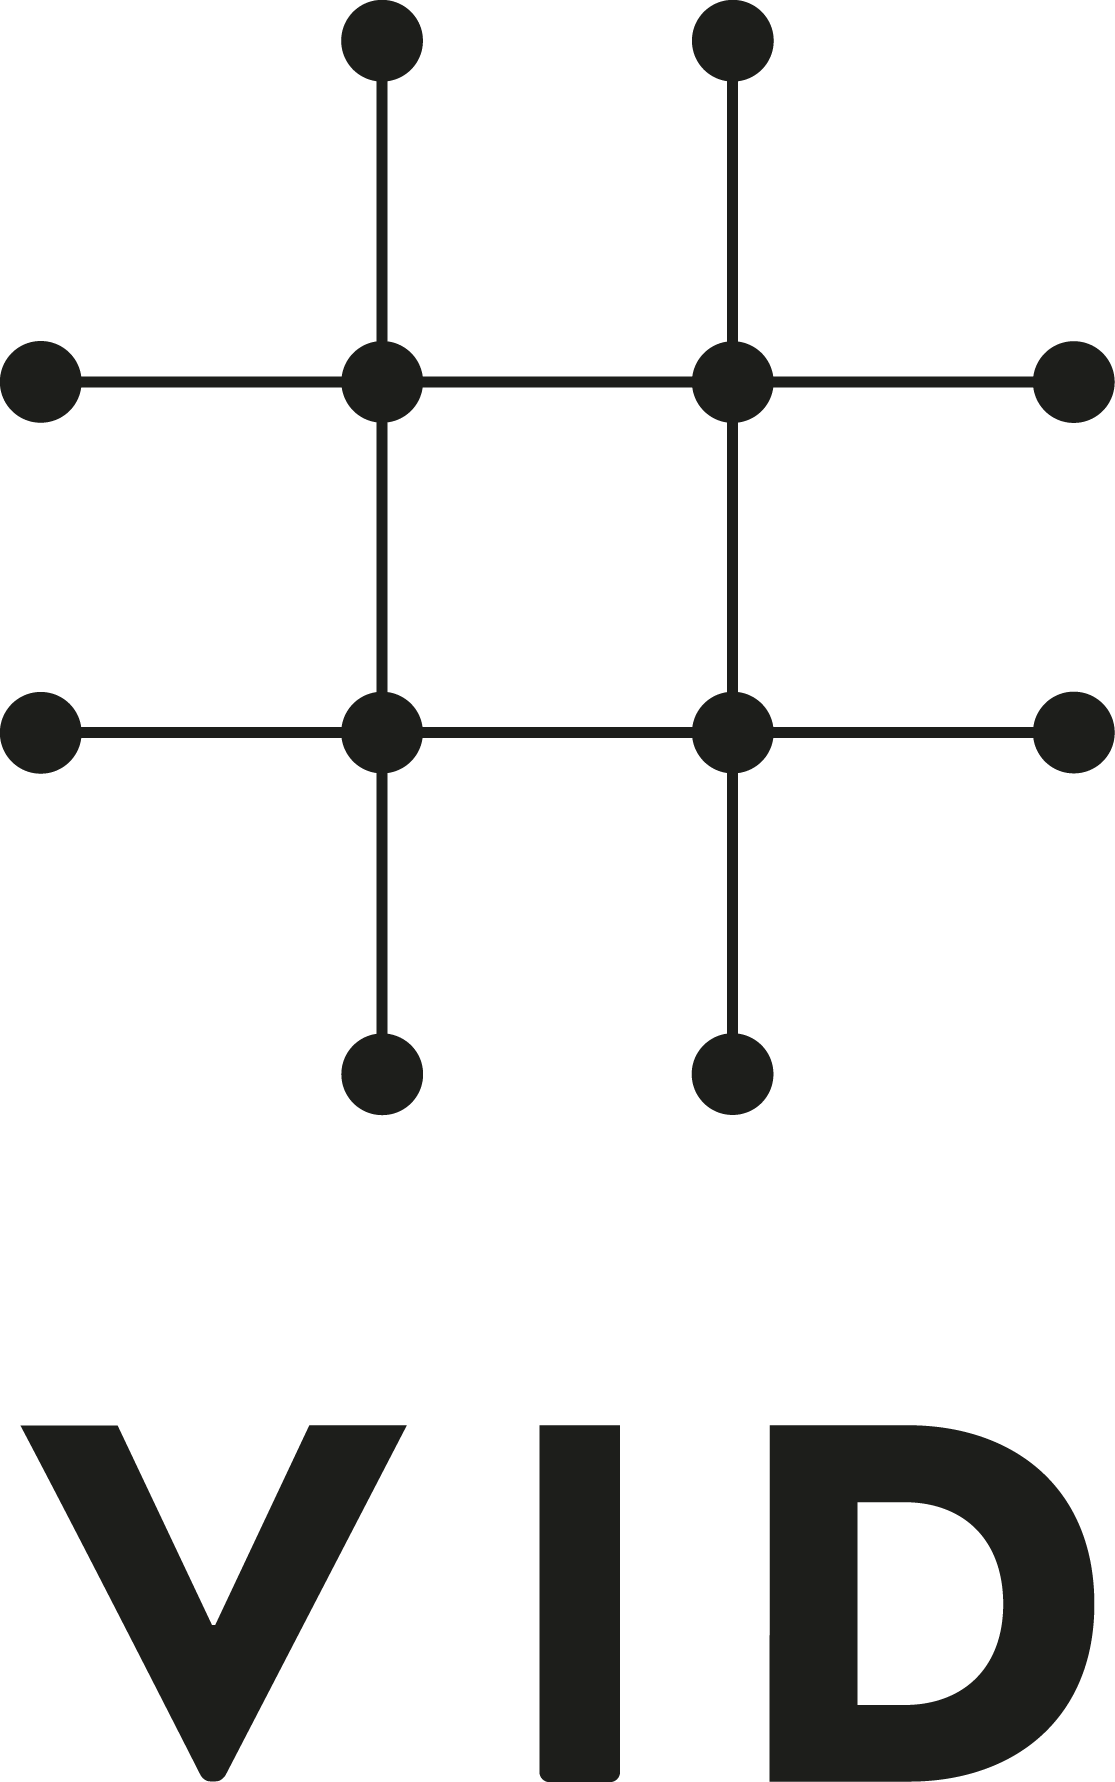 vid-logo-black-vertical.png